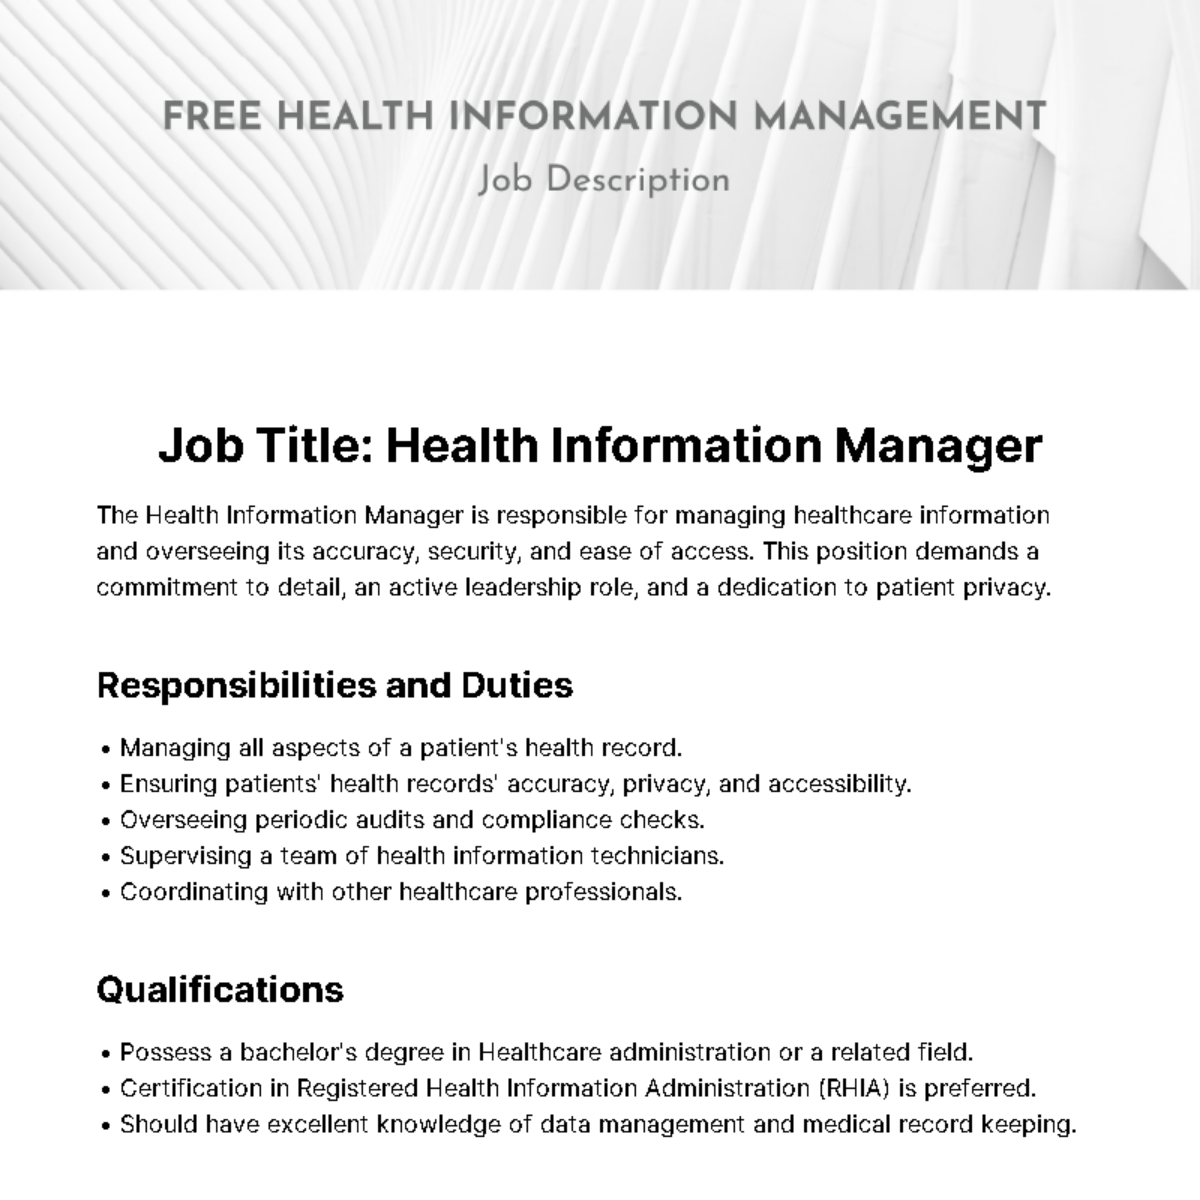 Free Health Information Management Job Description Template